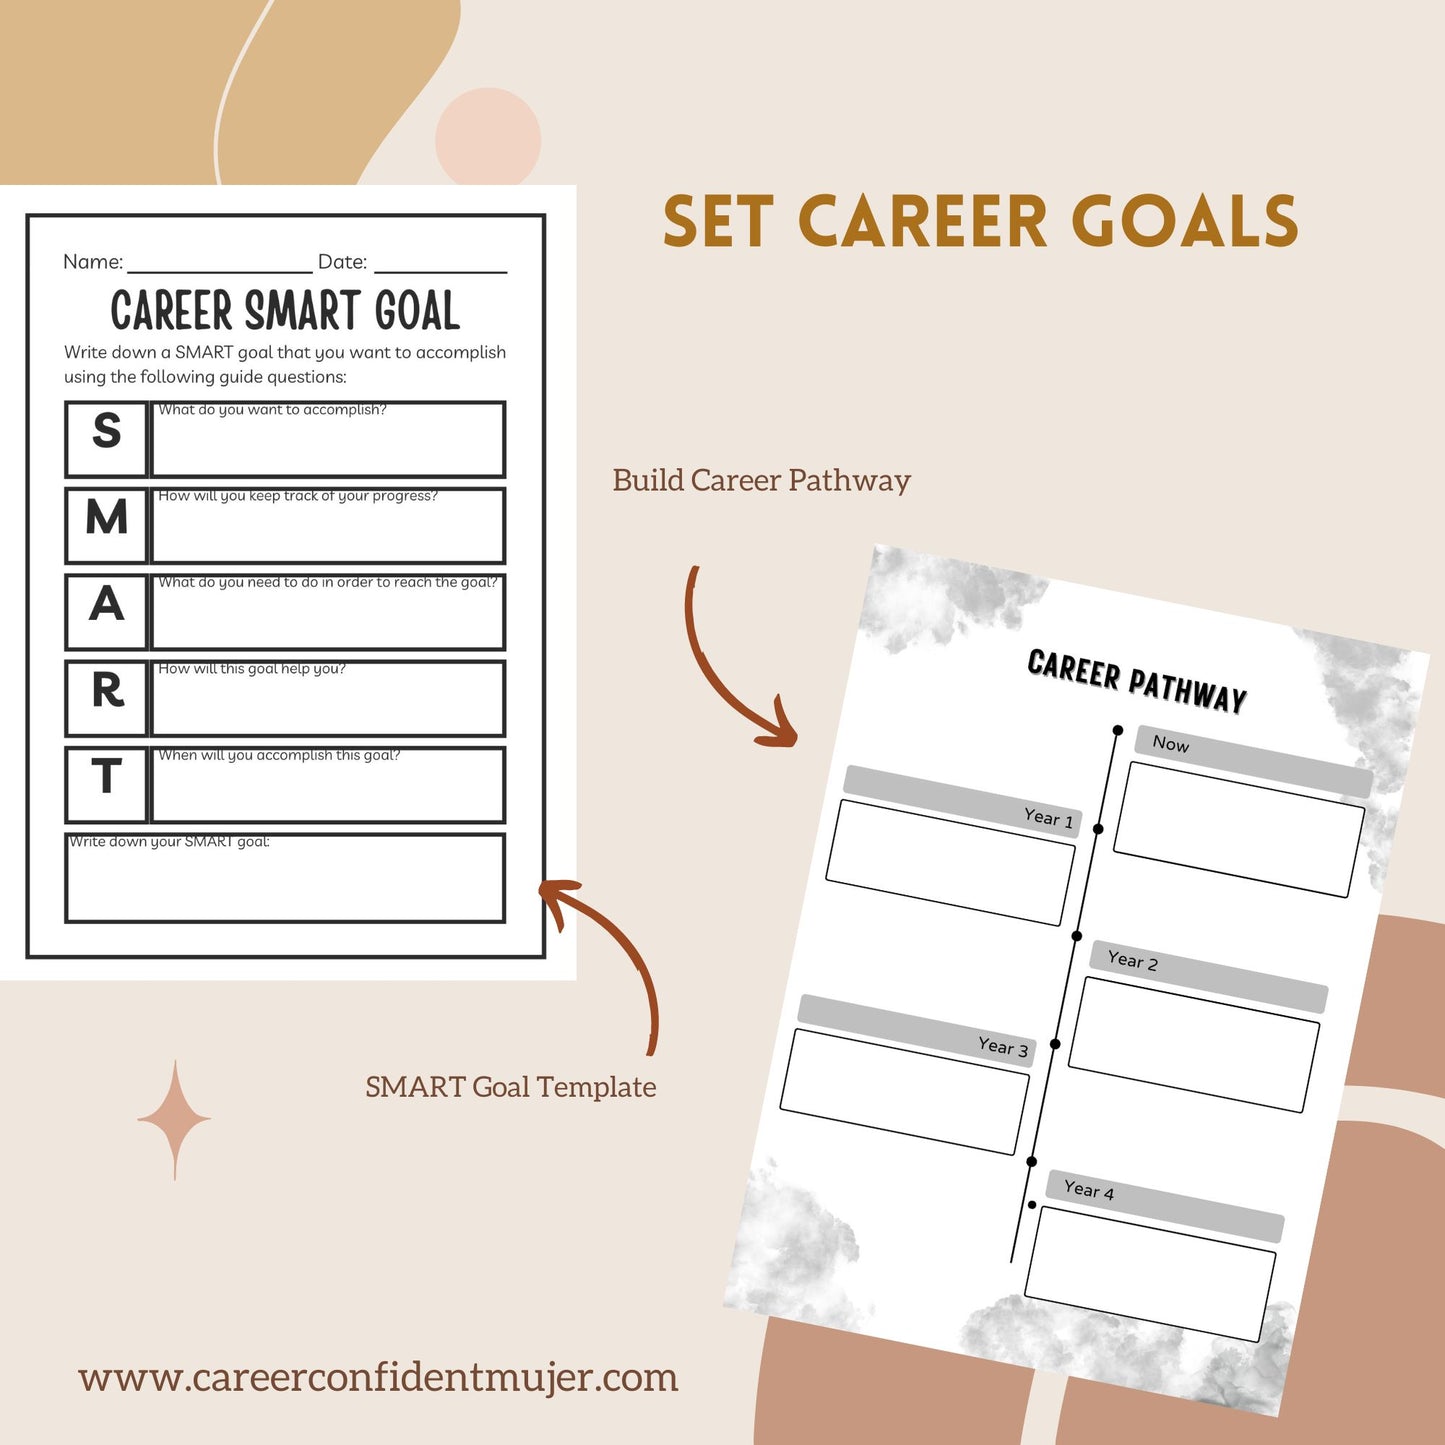 5-Year Career Plan Workbook